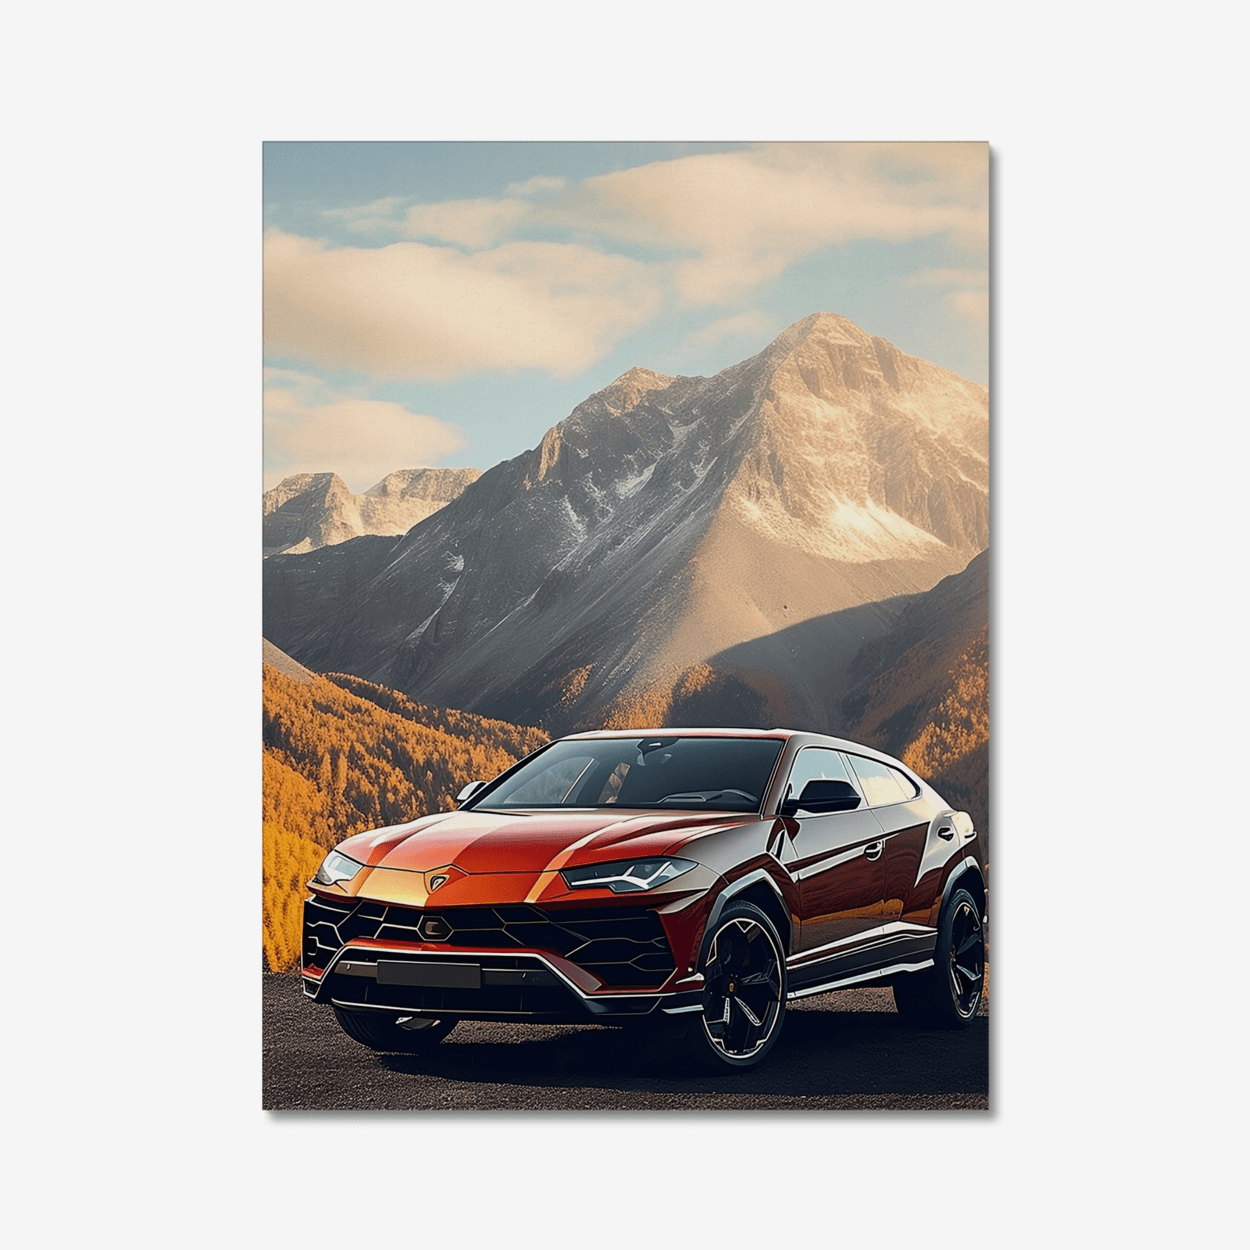 Lamborghini urus in the mountains